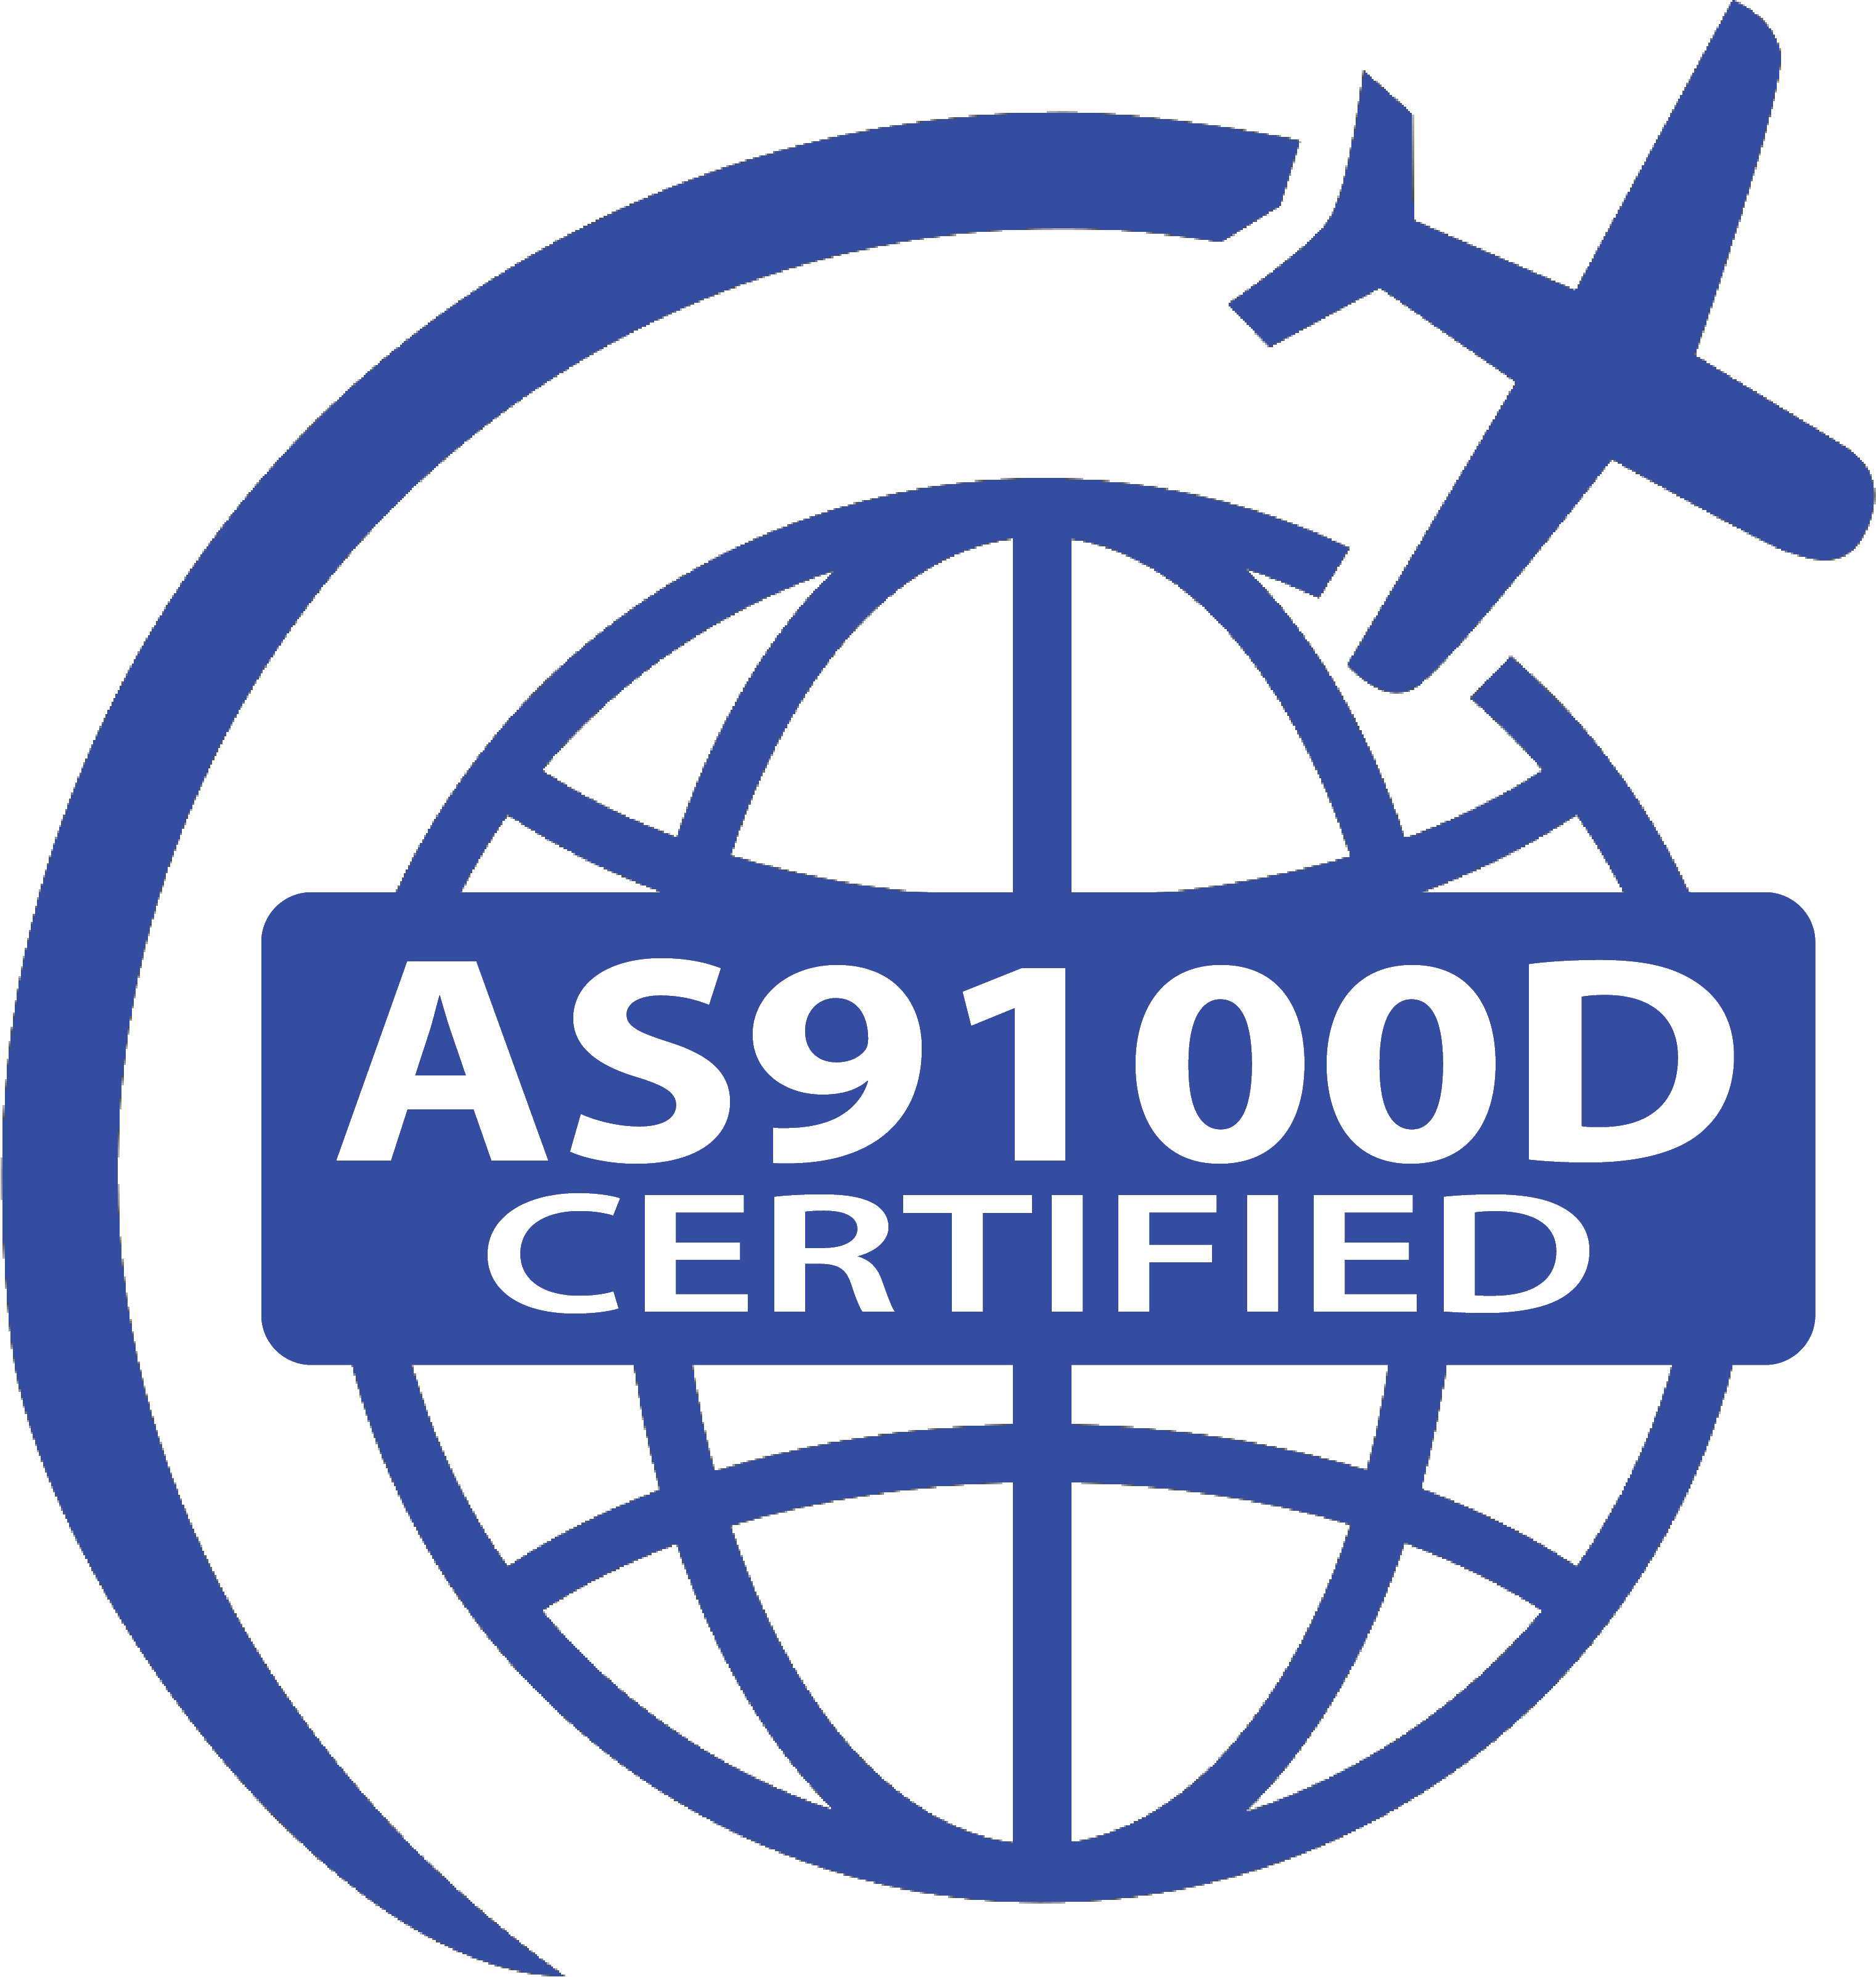 AS9100D certification